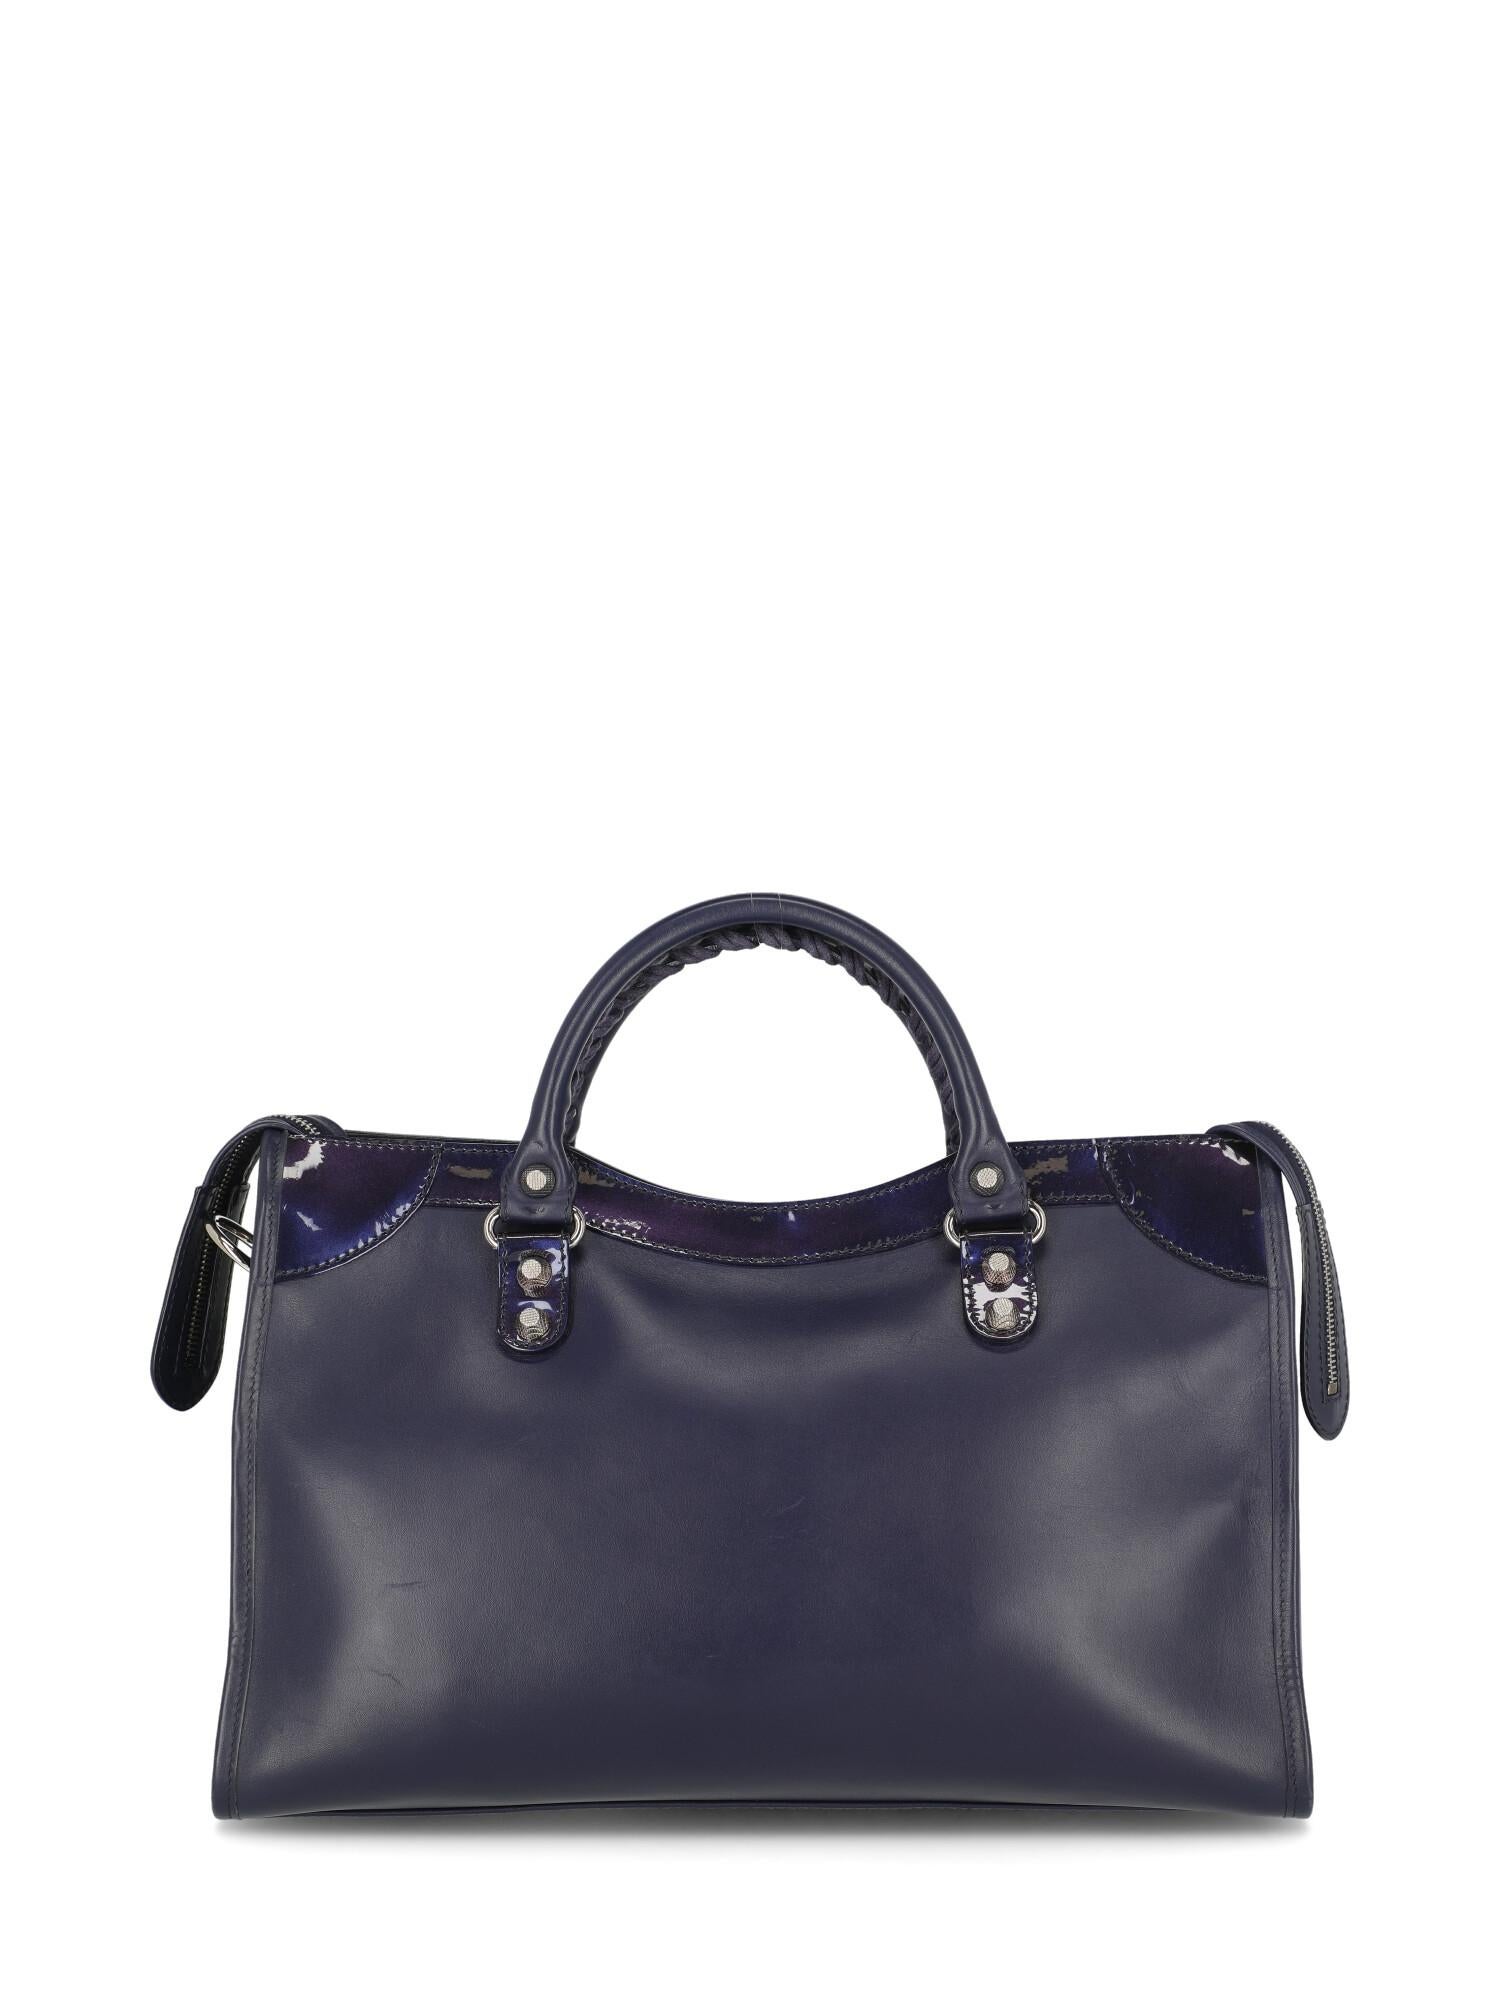 Balenciaga Woman Handbag City Navy Leather In Good Condition For Sale In Milan, IT